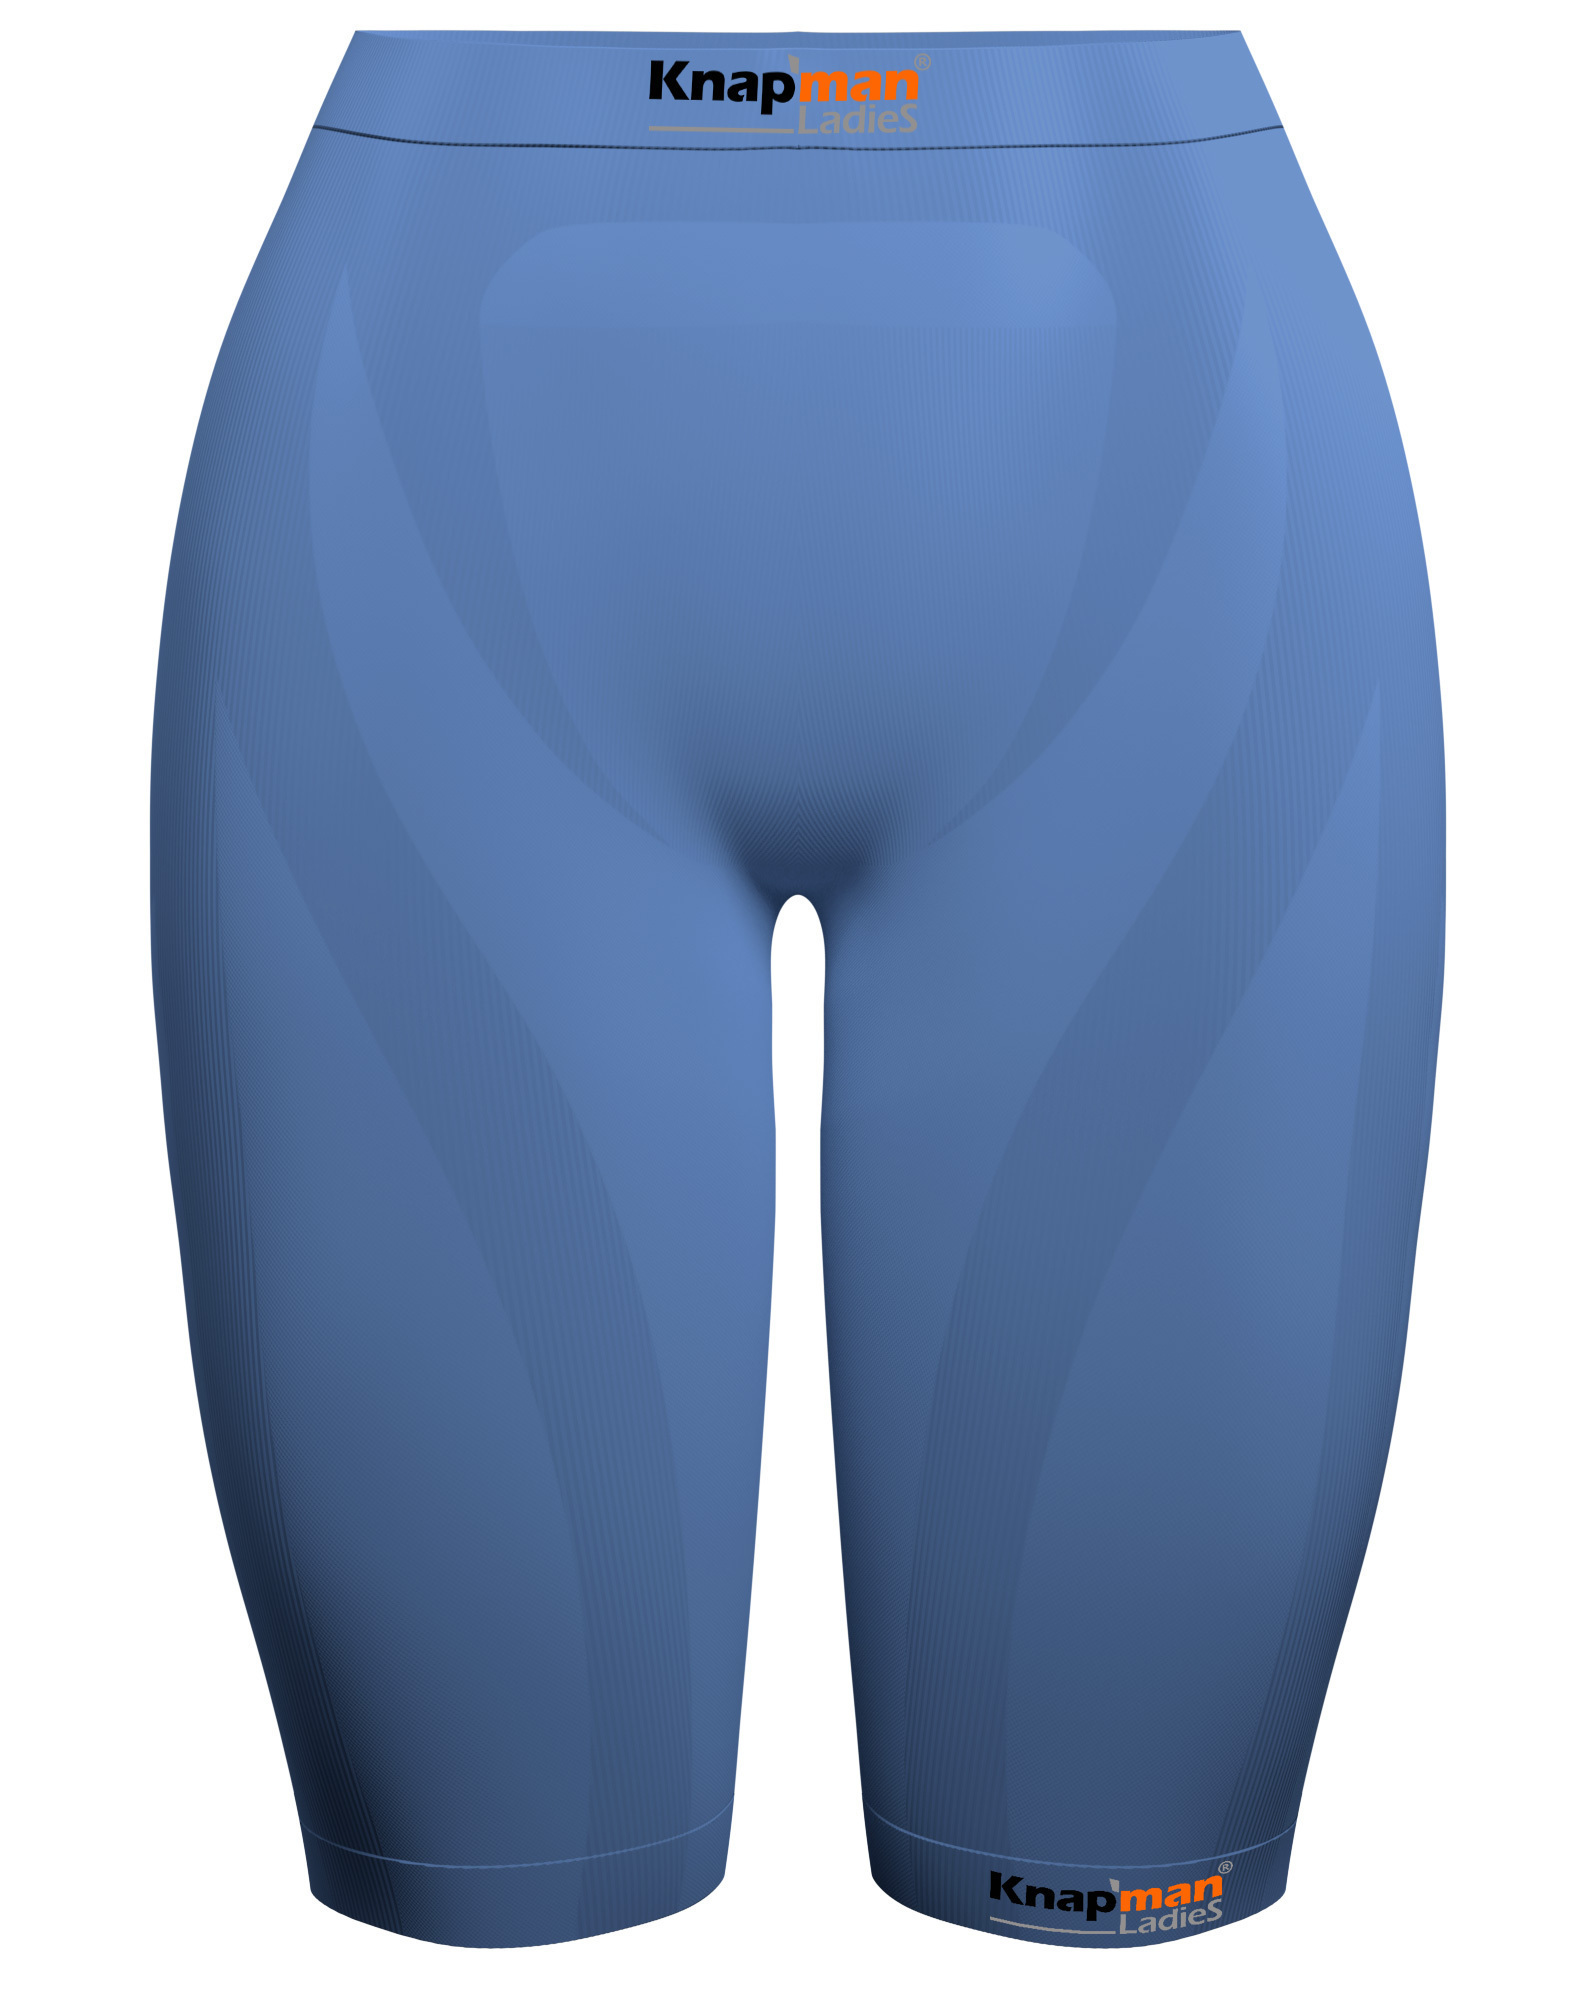 Women's compression shorts Kempa Attitude Pro - Compression garments -  Protections - Equipment